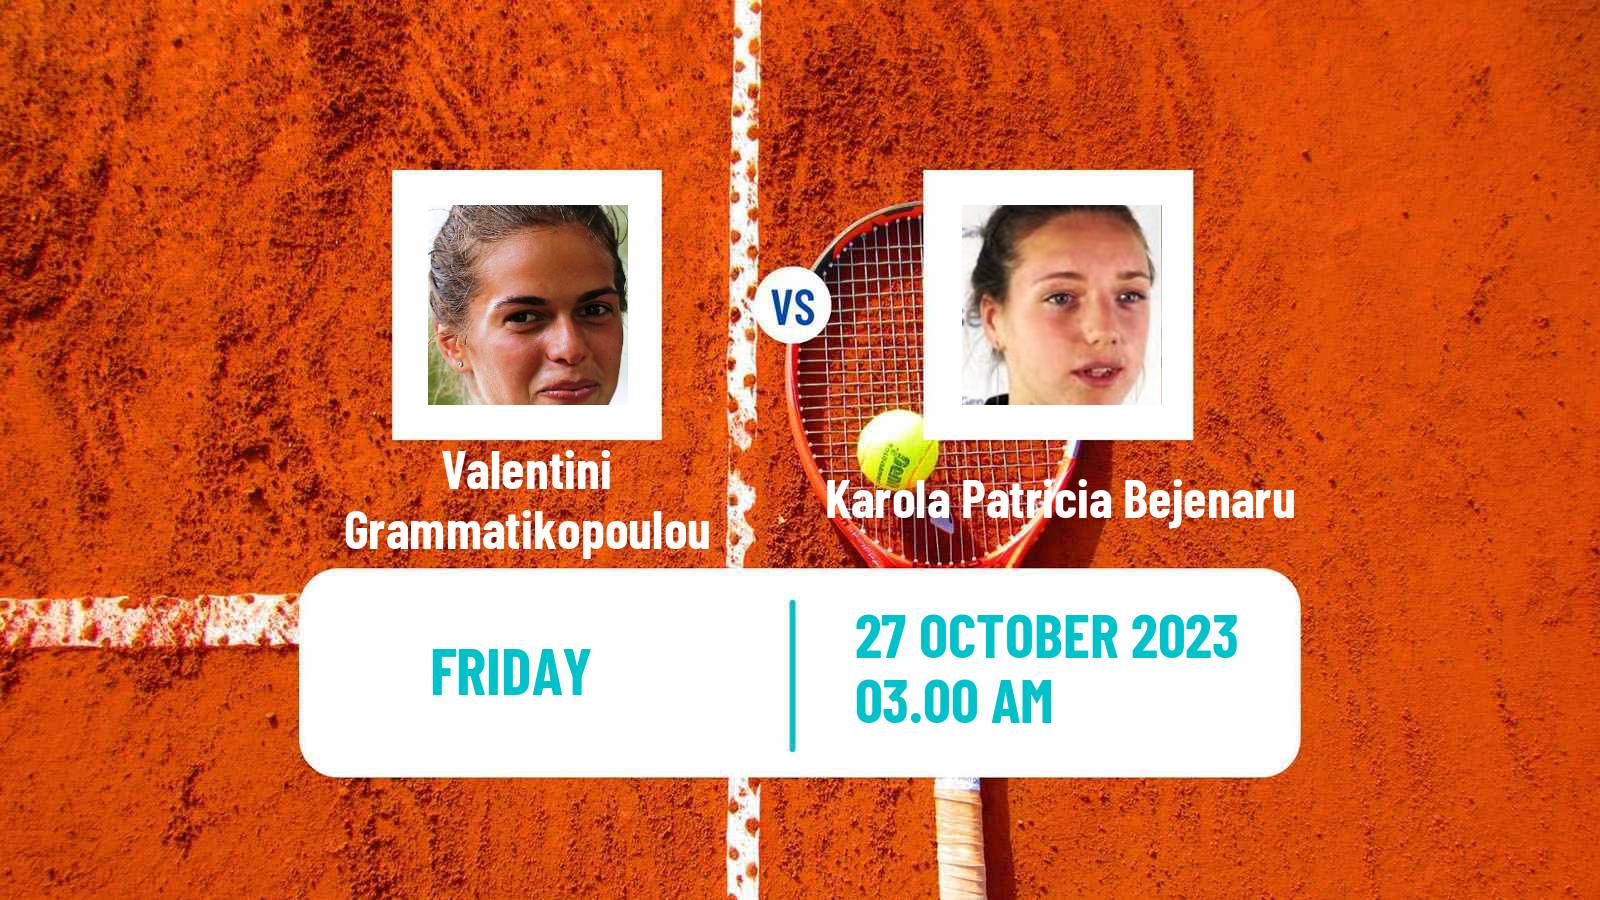 Tennis ITF W25 Sharm Elsheikh 3 Women Valentini Grammatikopoulou - Karola Patricia Bejenaru